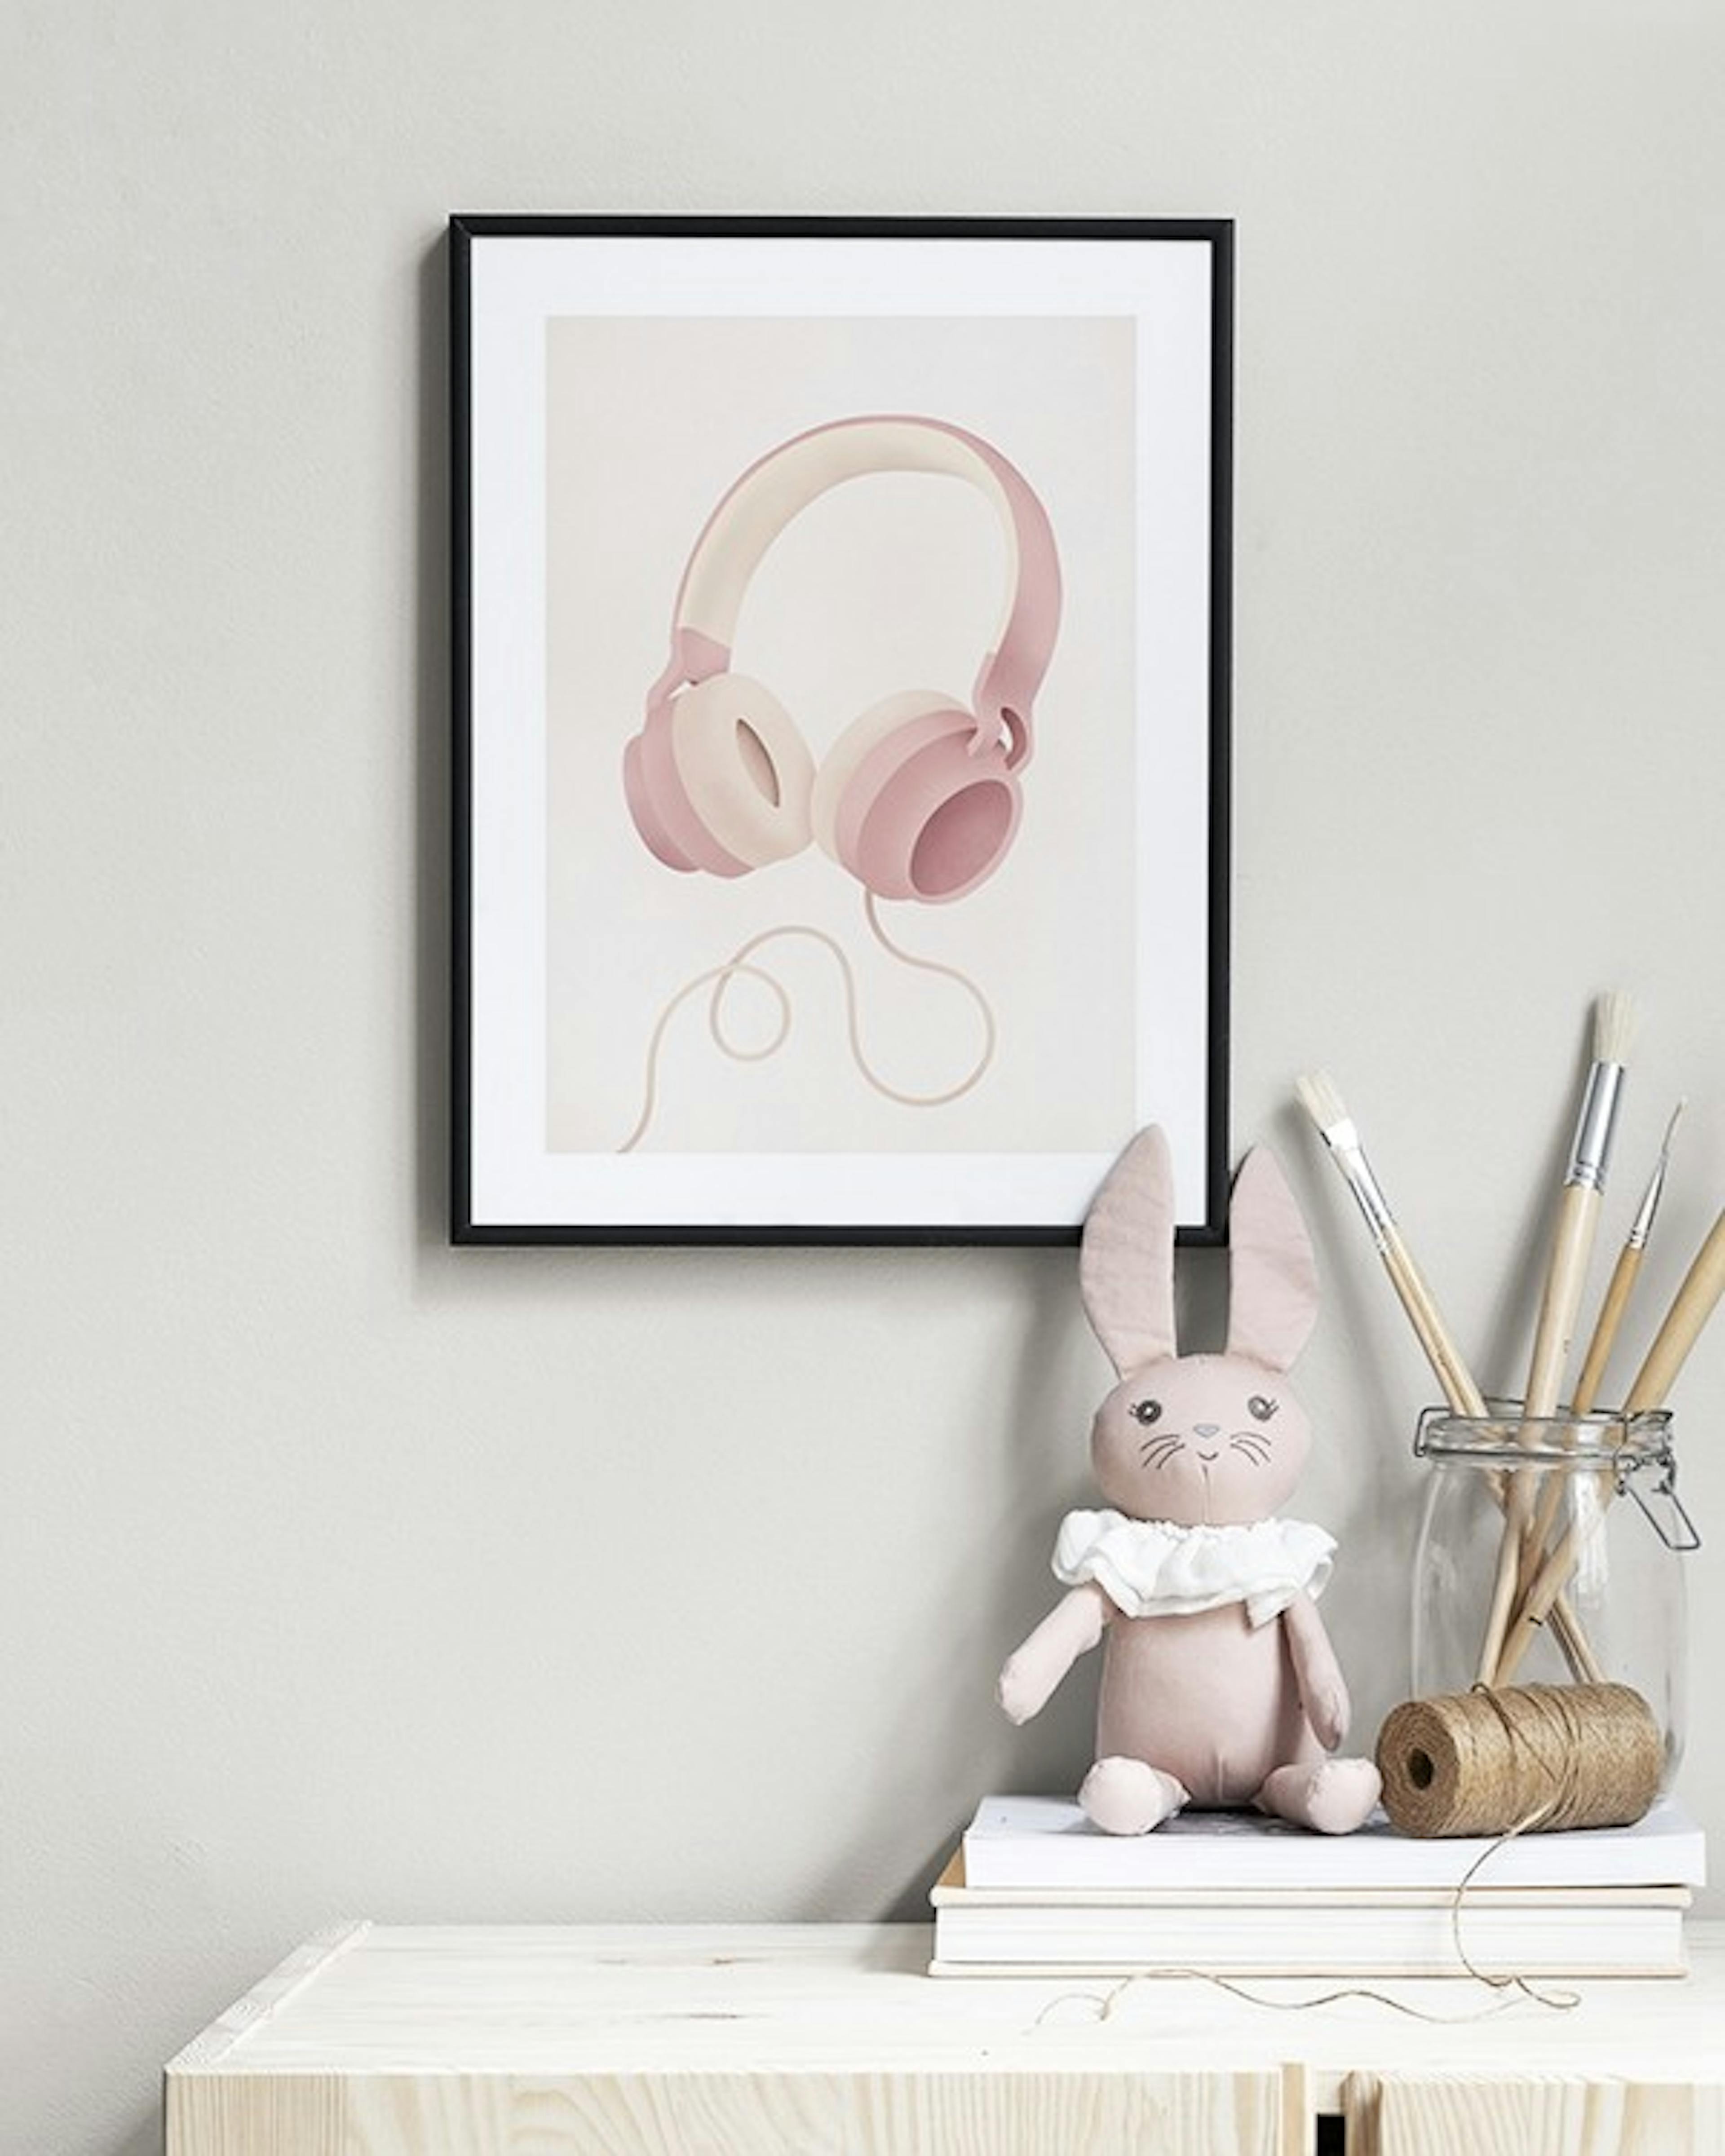 Pastel Headphones Poster